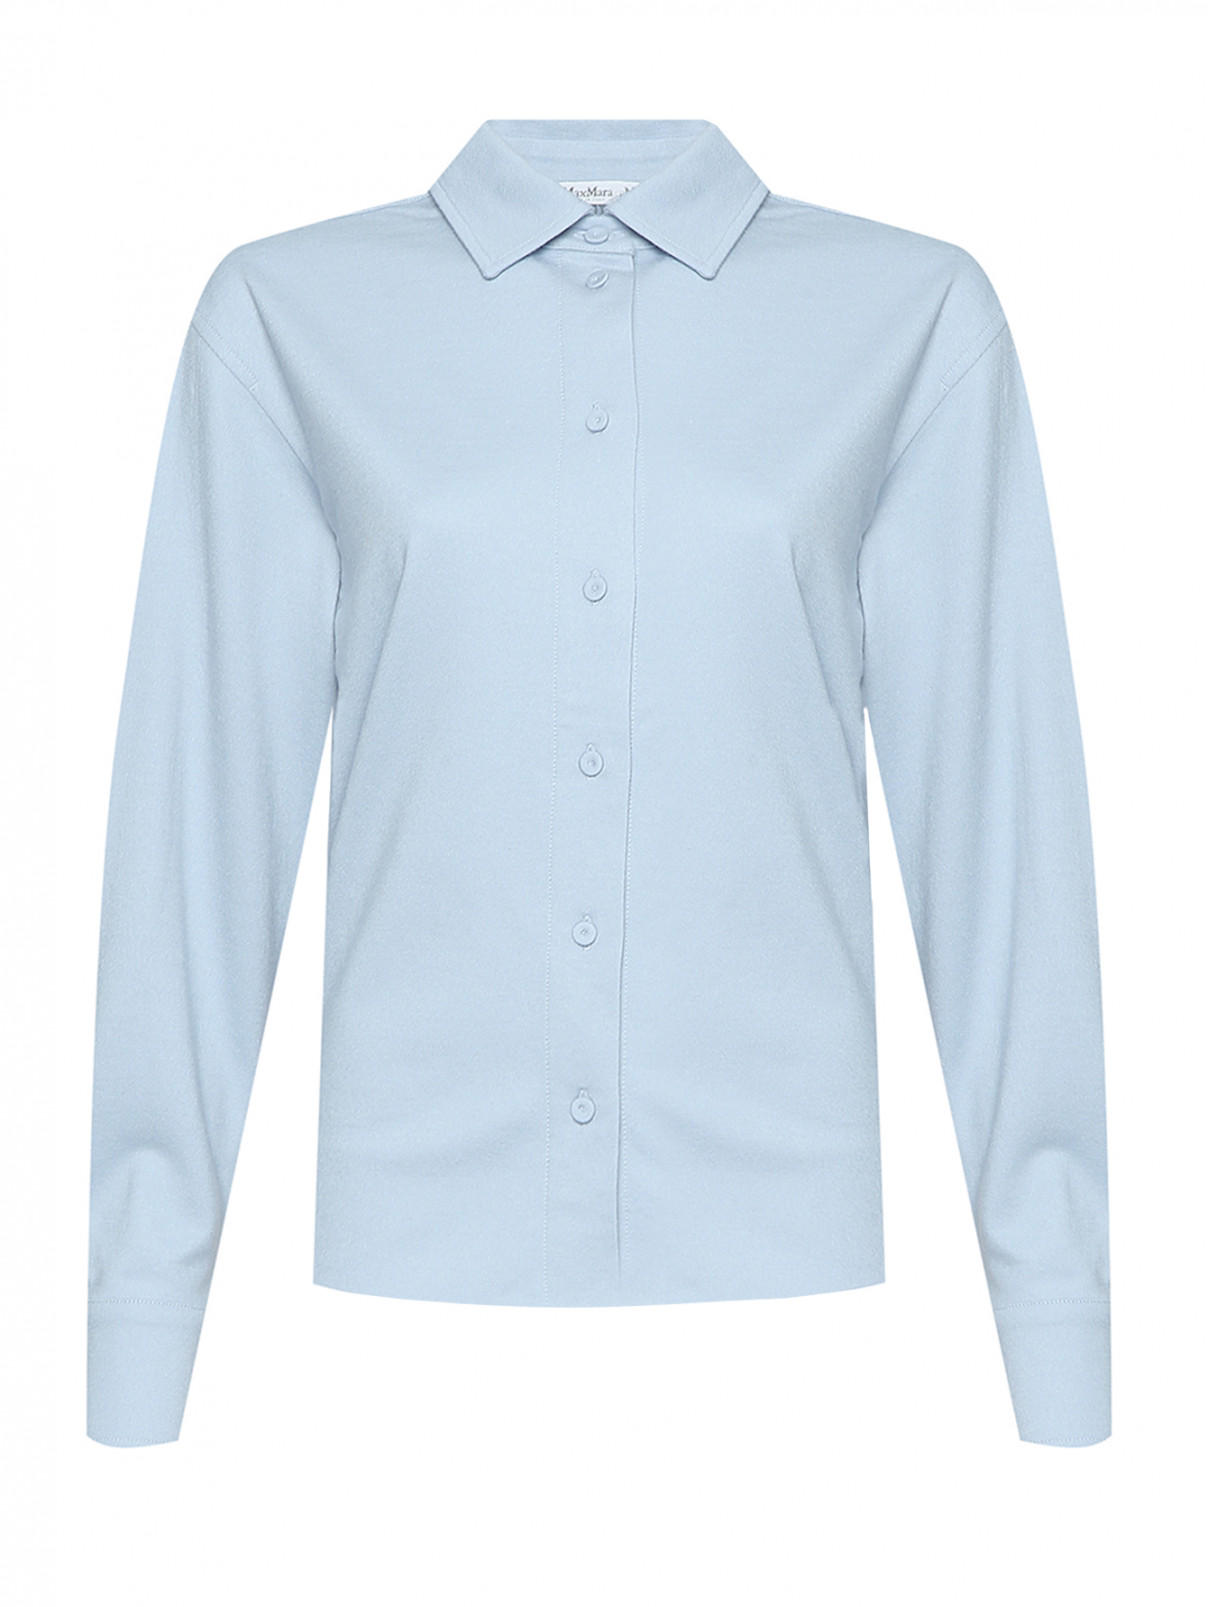 Трикотажная рубашка свободного кроя Max Mara  –  Общий вид  – Цвет:  Синий